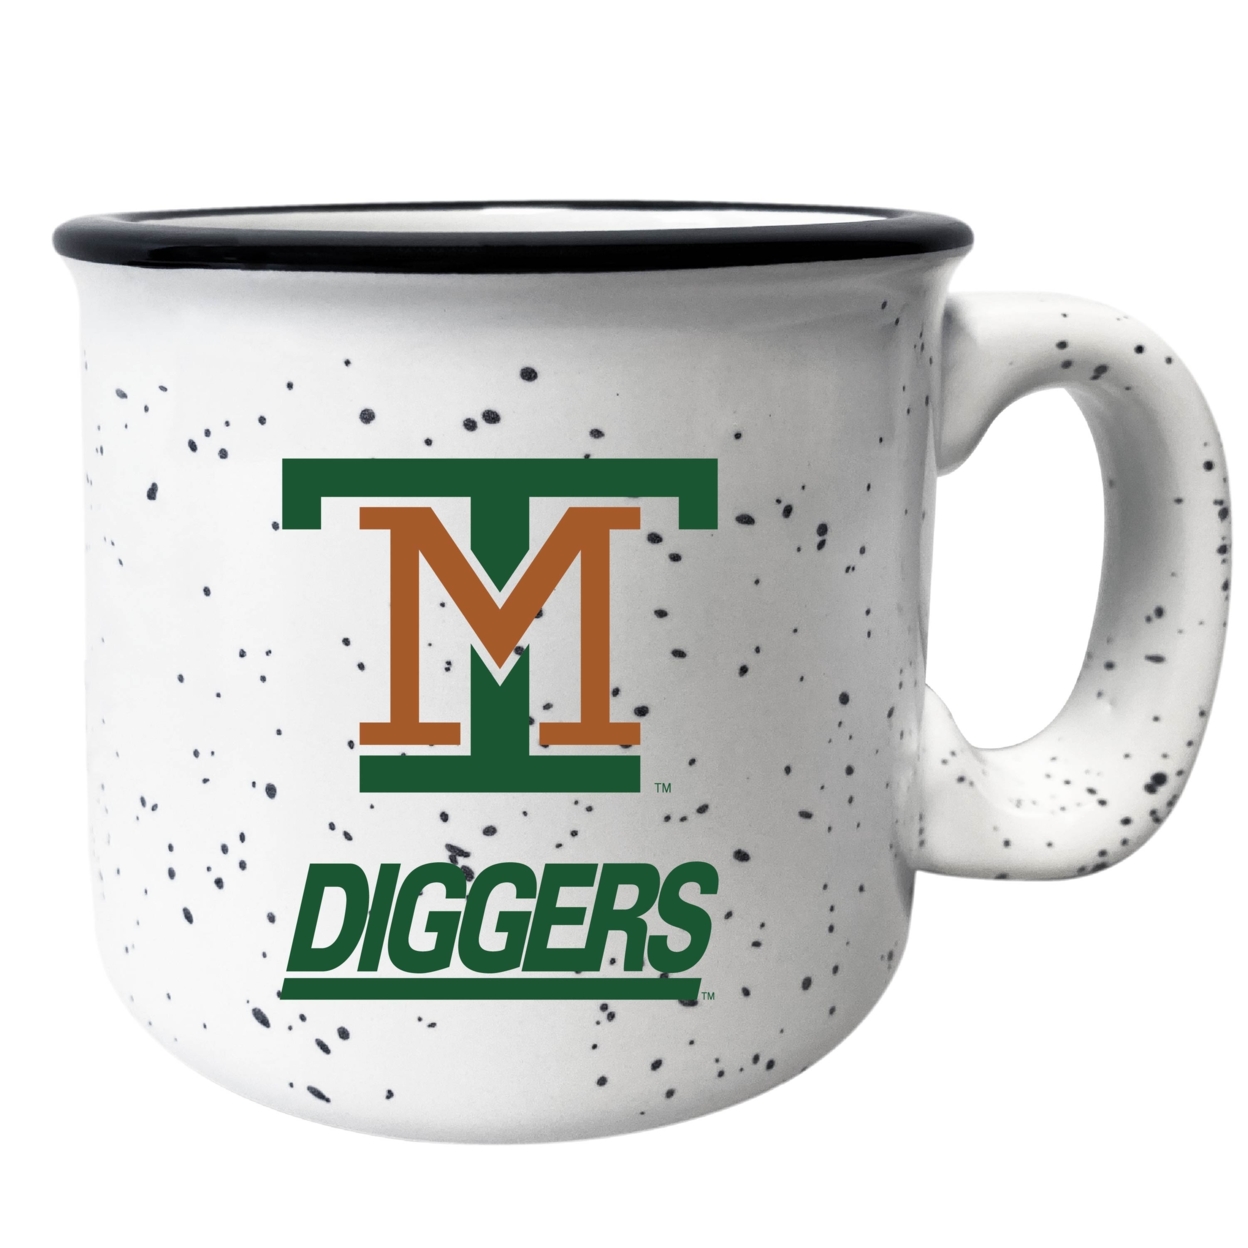 Montana Tech Speckled Ceramic Camper Coffee Mug - Choose Your Color - Navy